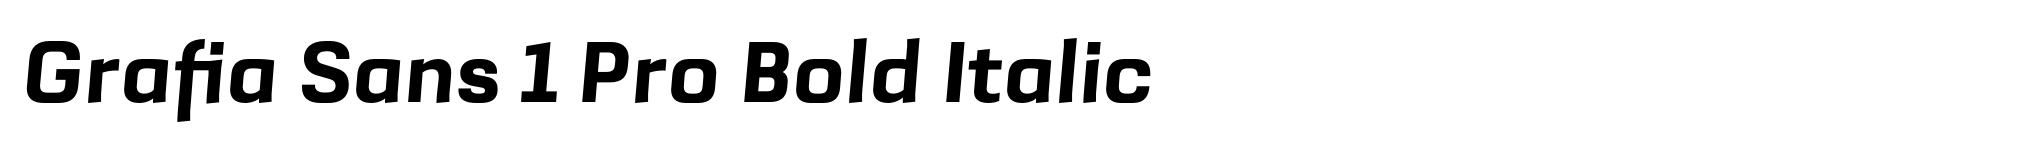 Grafia Sans 1 Pro Bold Italic image